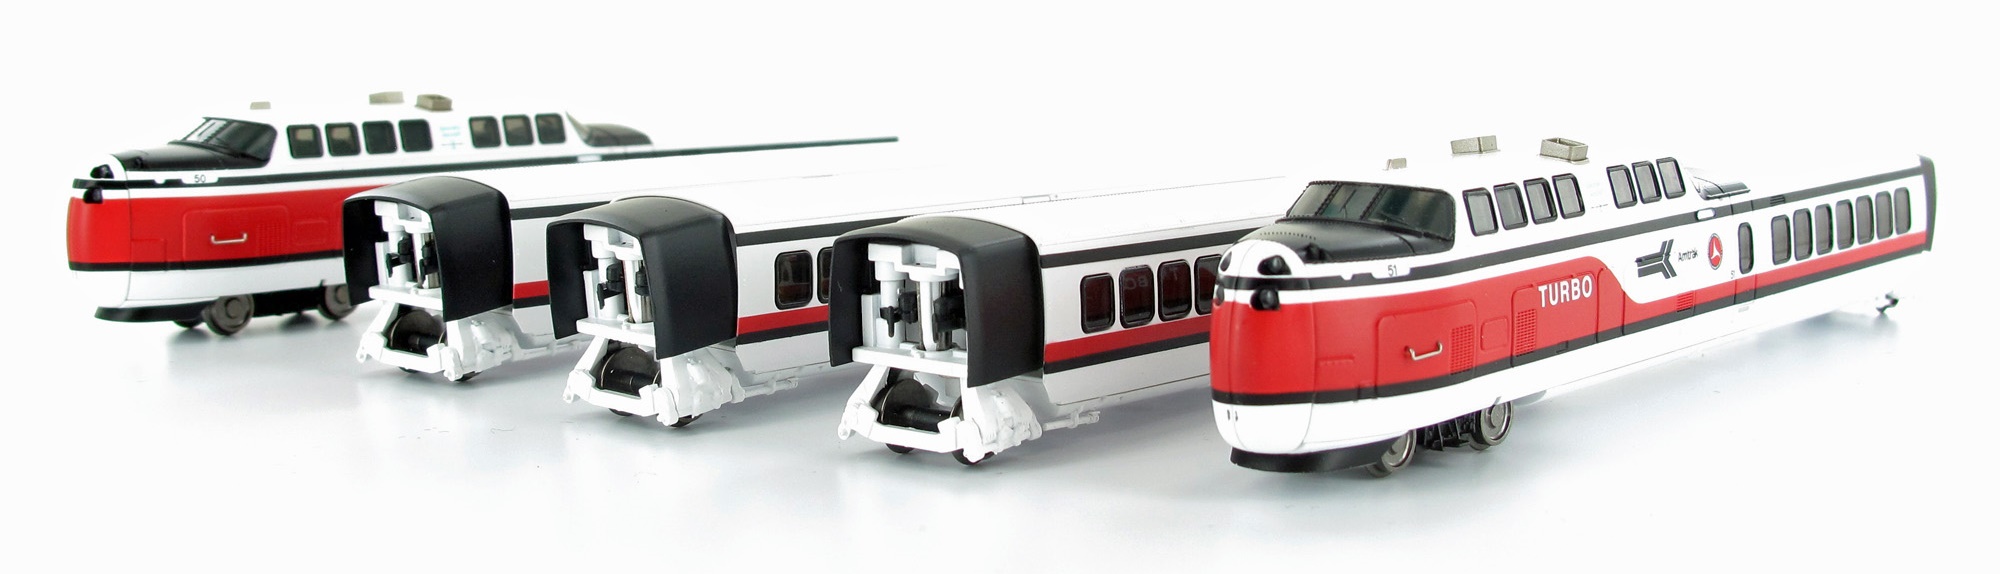 N Scale - Rapido Trains - 520003 - Passenger Train, TurboTrain - Amtrak